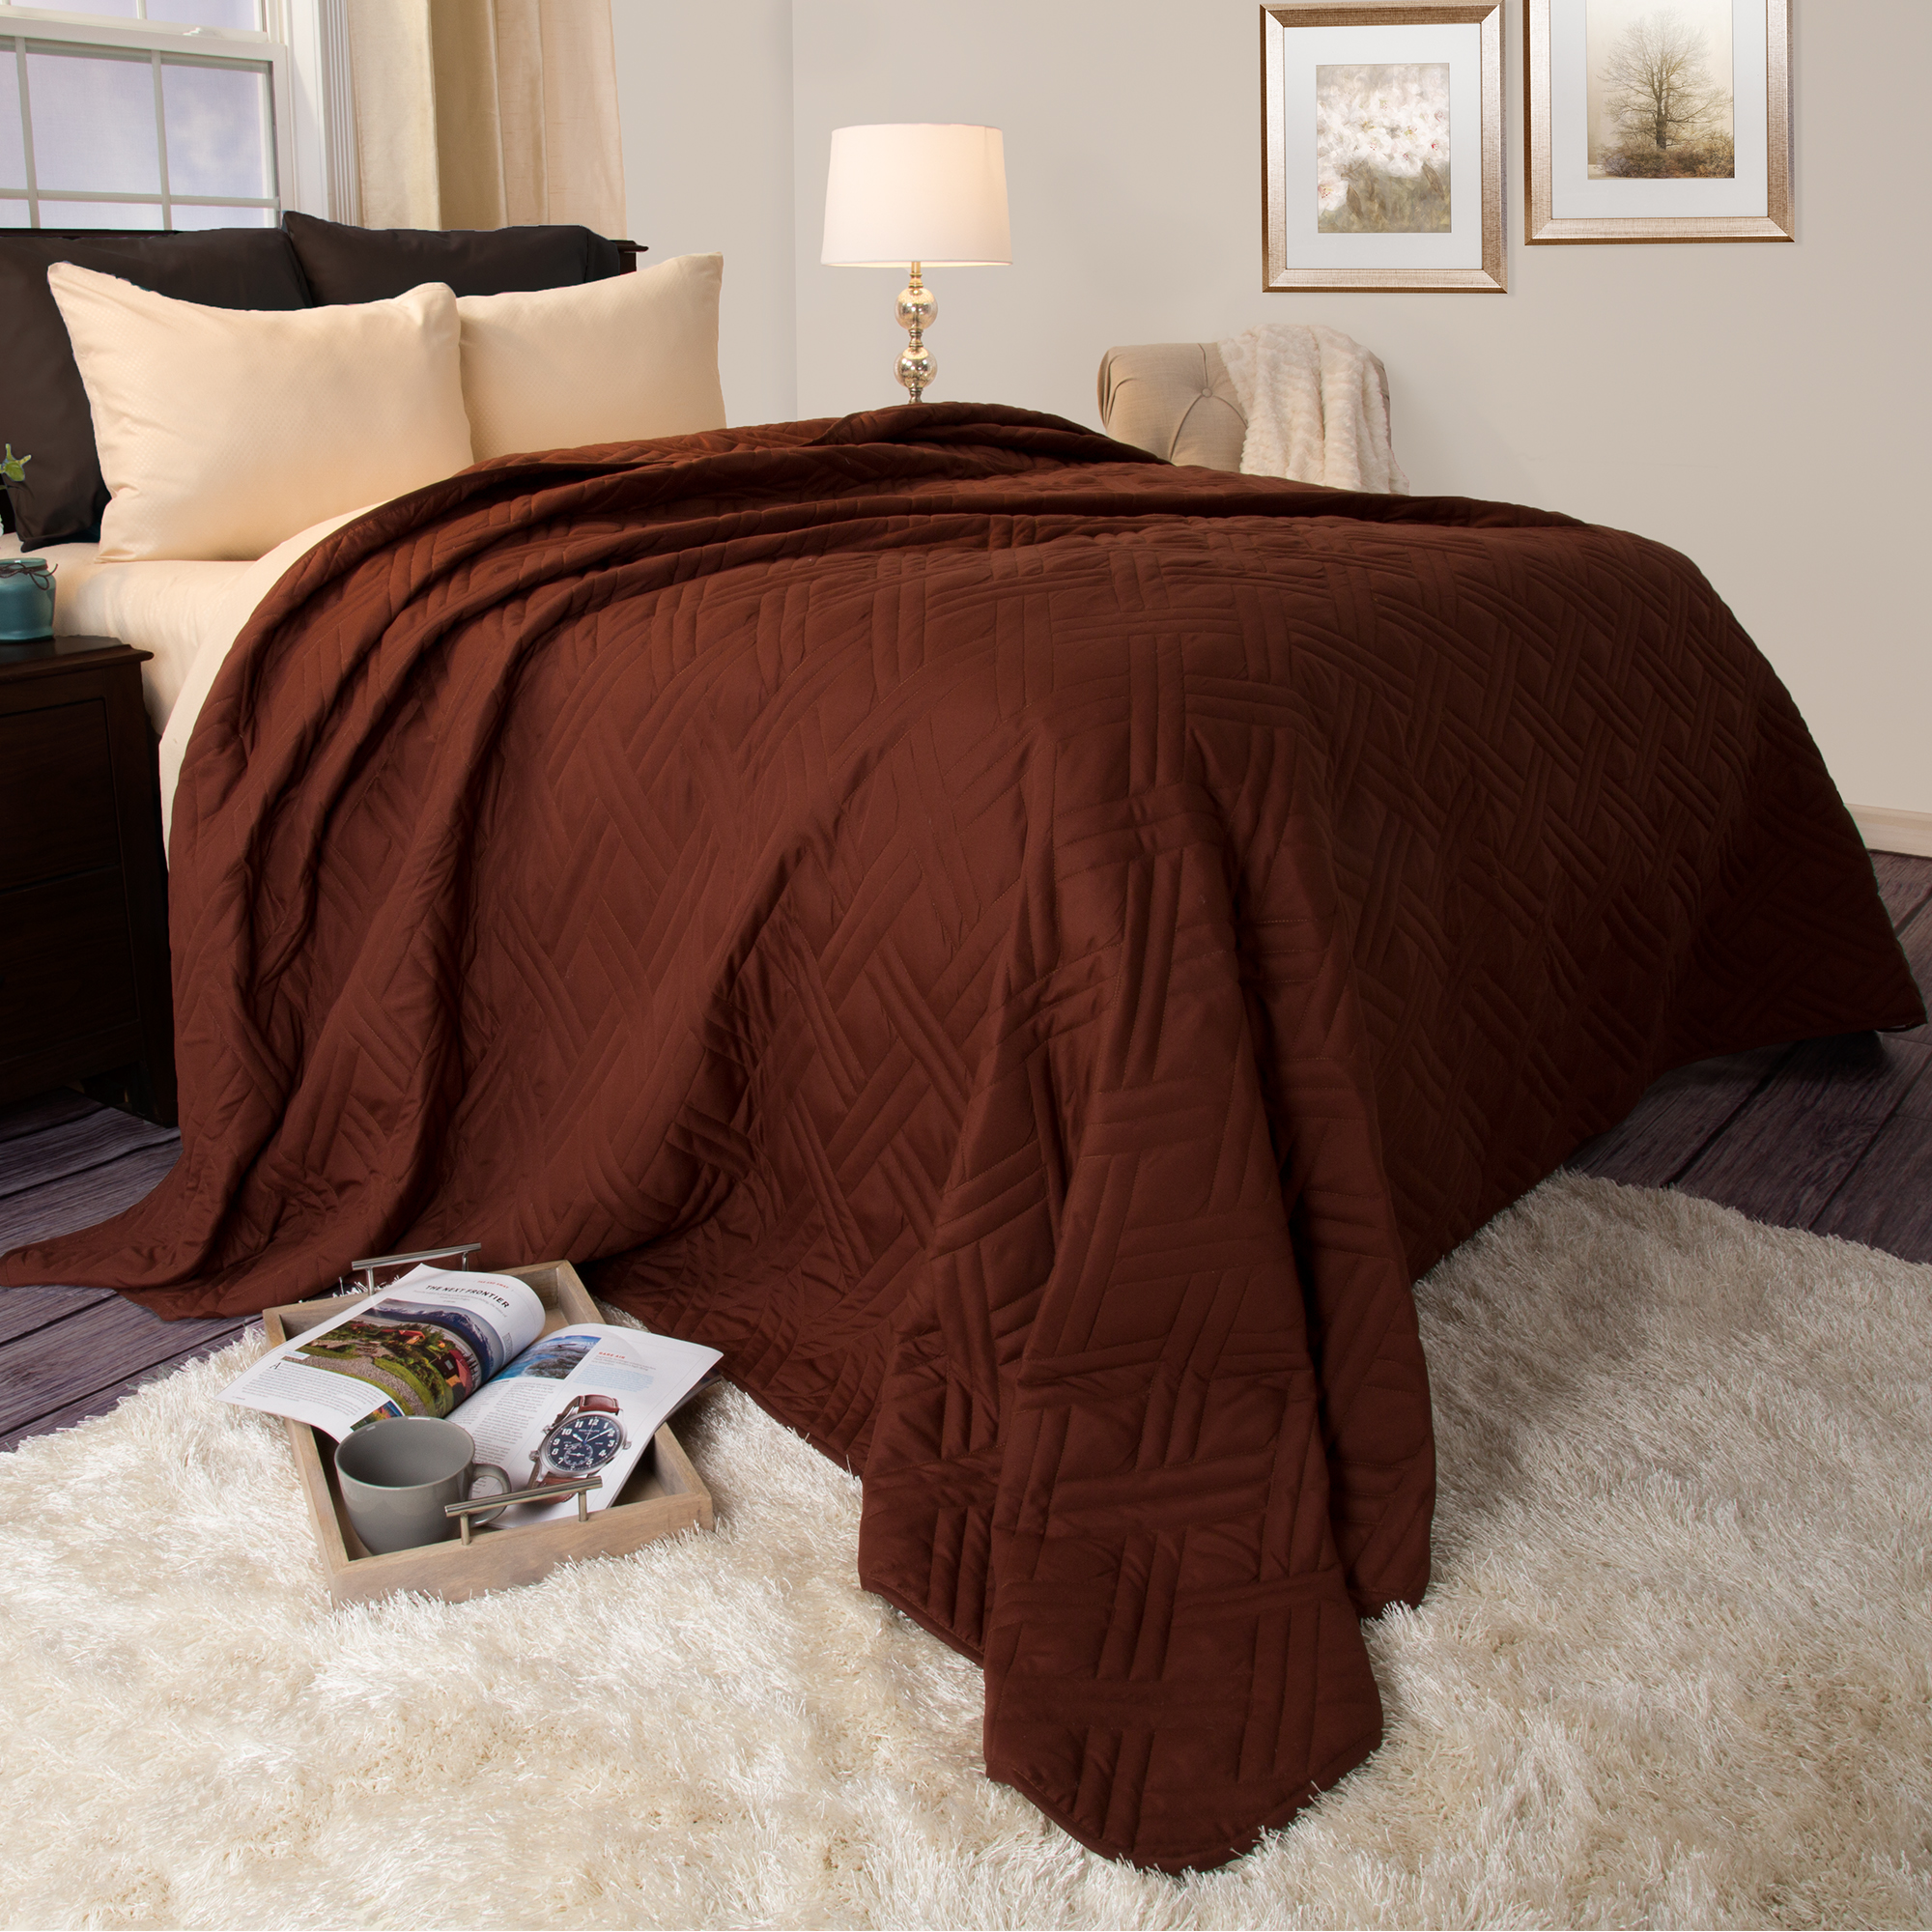 Somerset Home Solid Color Bed Quilt, King, Beige - image 2 of 3